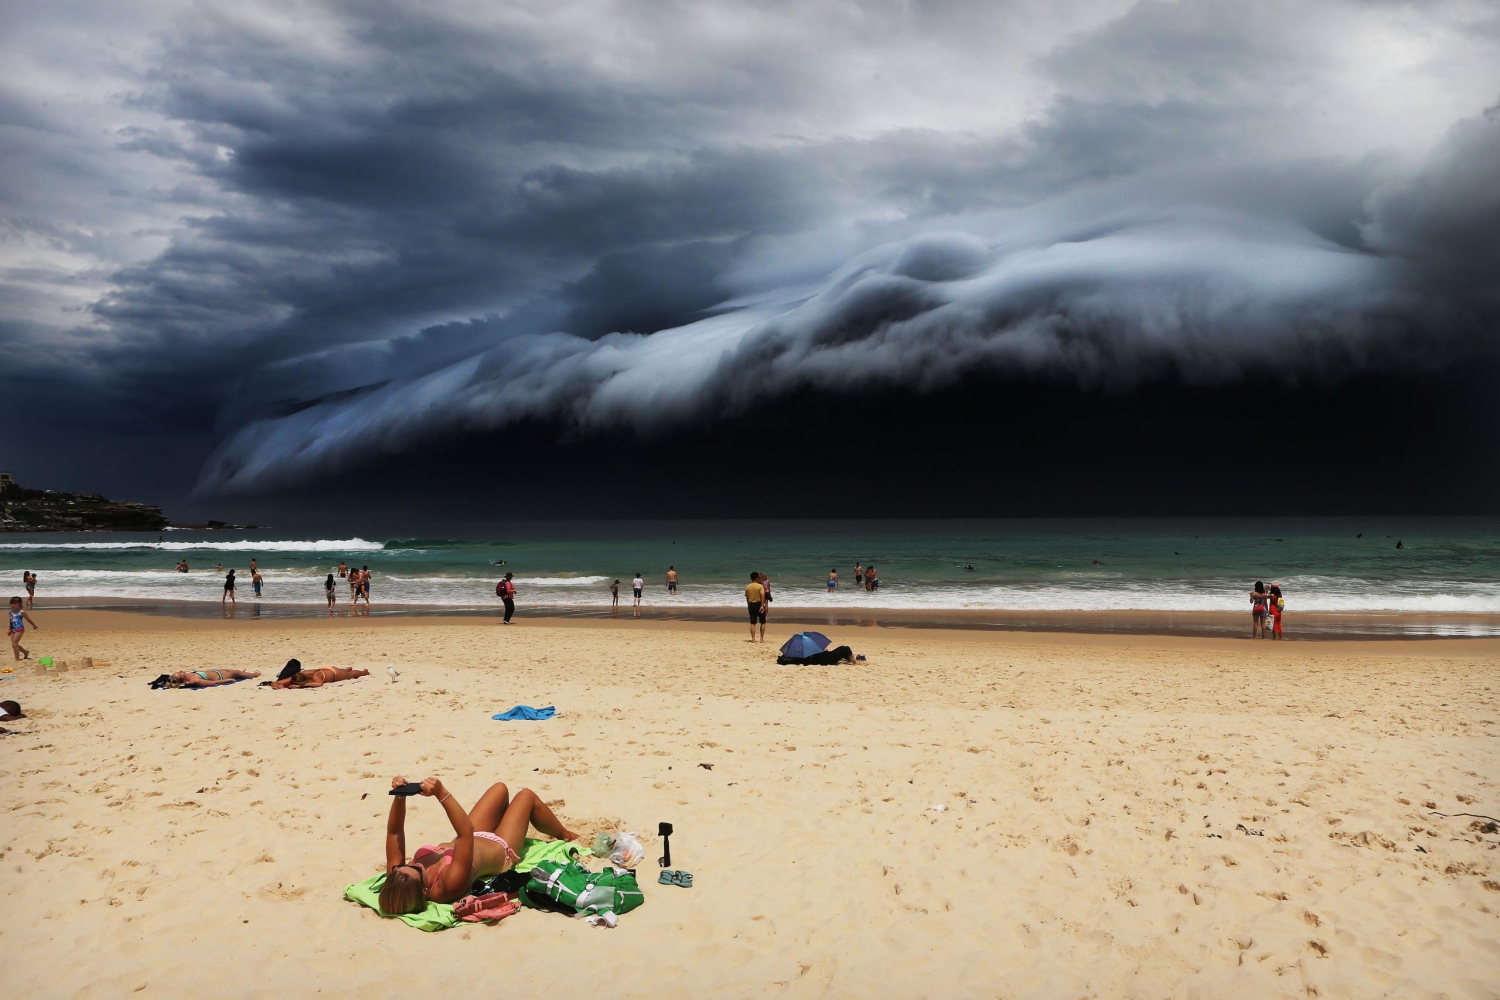 Una tormenta sobre una playa australiana, primer premio ‘Naturaleza’ del World Press Photo